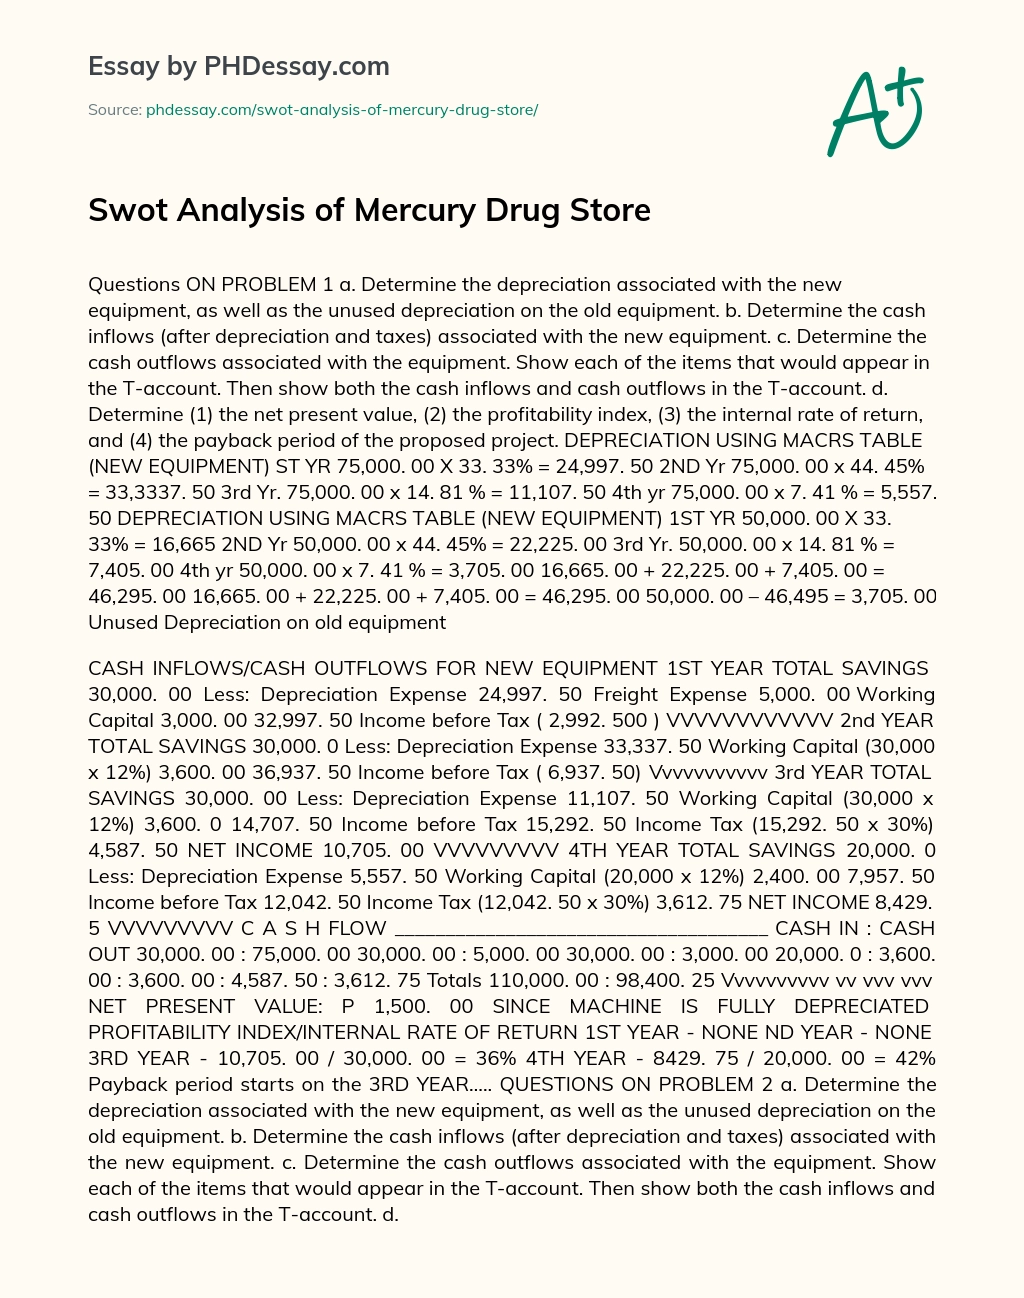 Swot Analysis of Mercury Drug Store essay